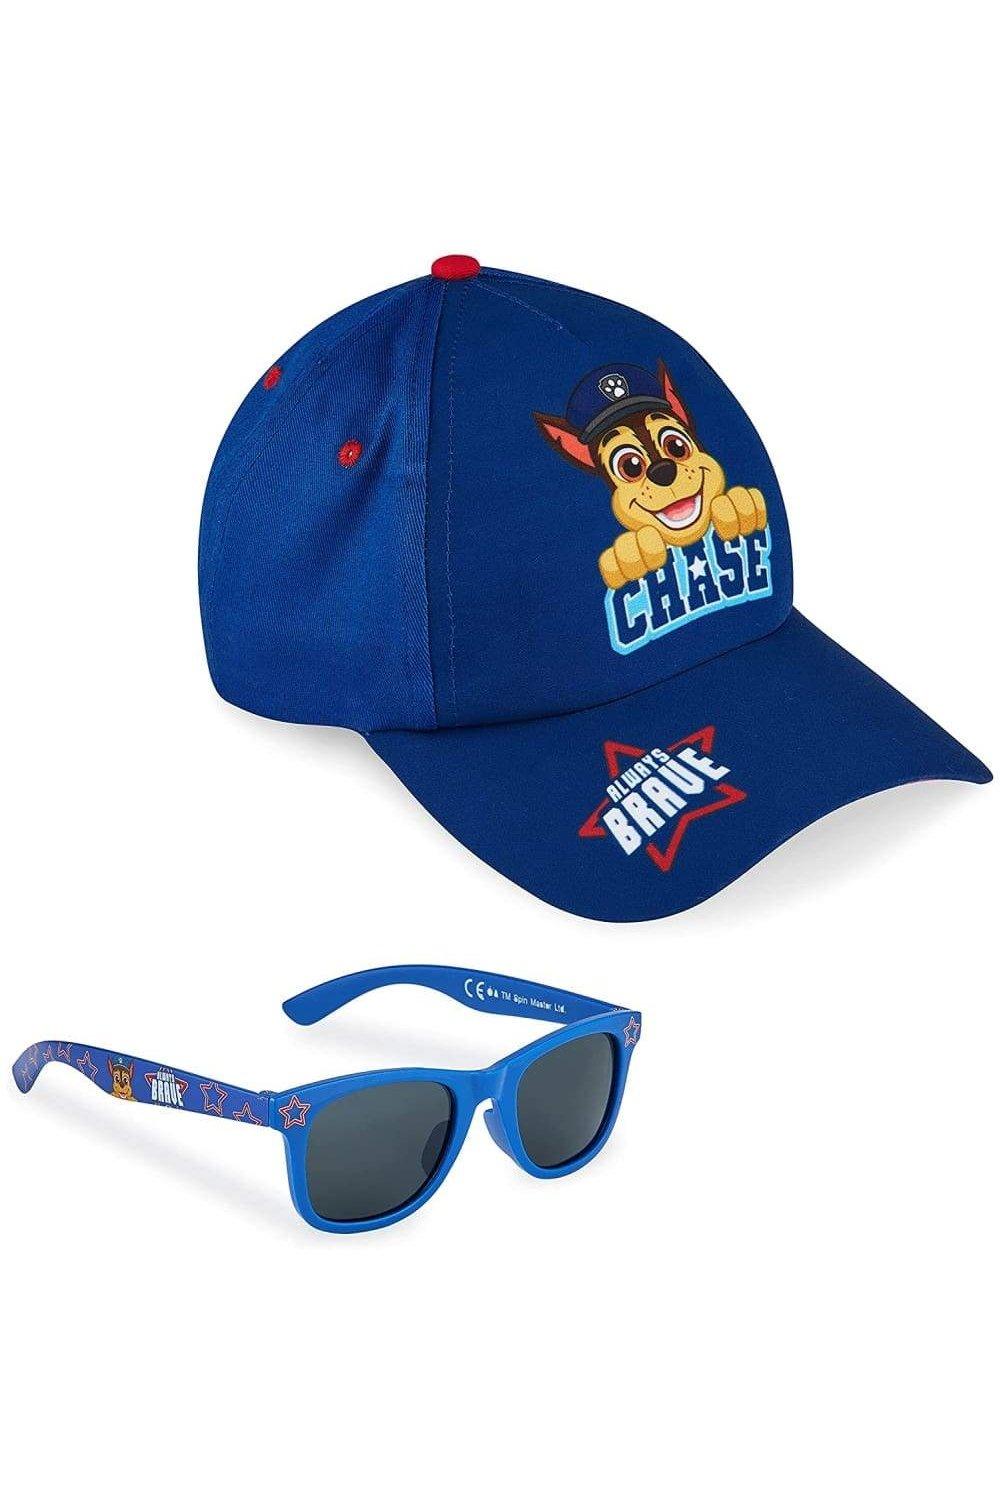 Бейсболка и солнцезащитные очки Chase Paw Patrol, синий бейсболка и солнцезащитные очки chase paw patrol синий